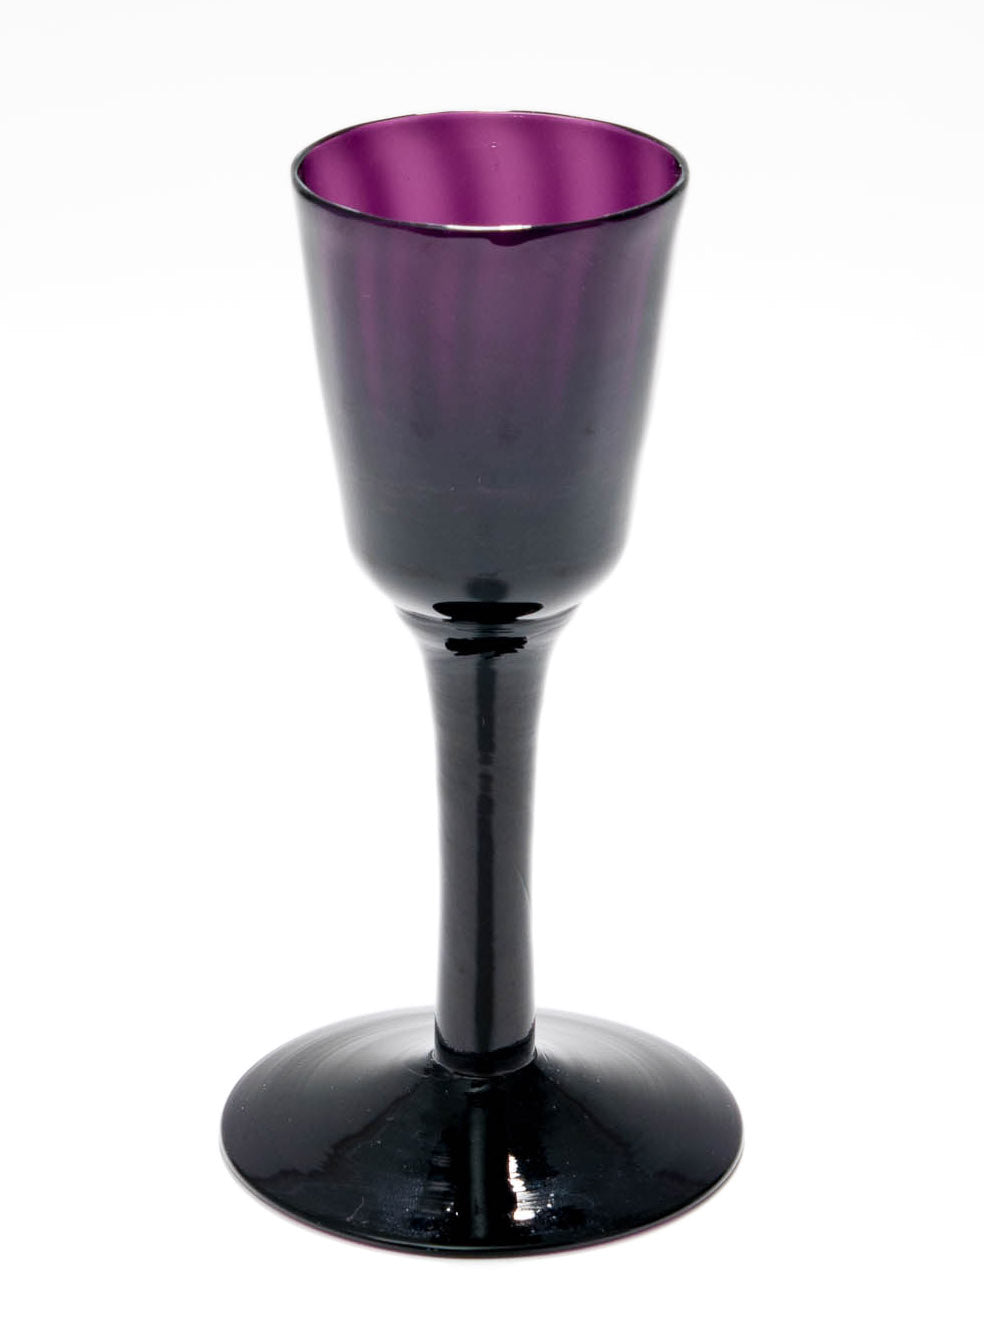 Rare Georgian Amethyst Wine Glass with Optic Rib & Plain Stem c1760 (Code 8946)